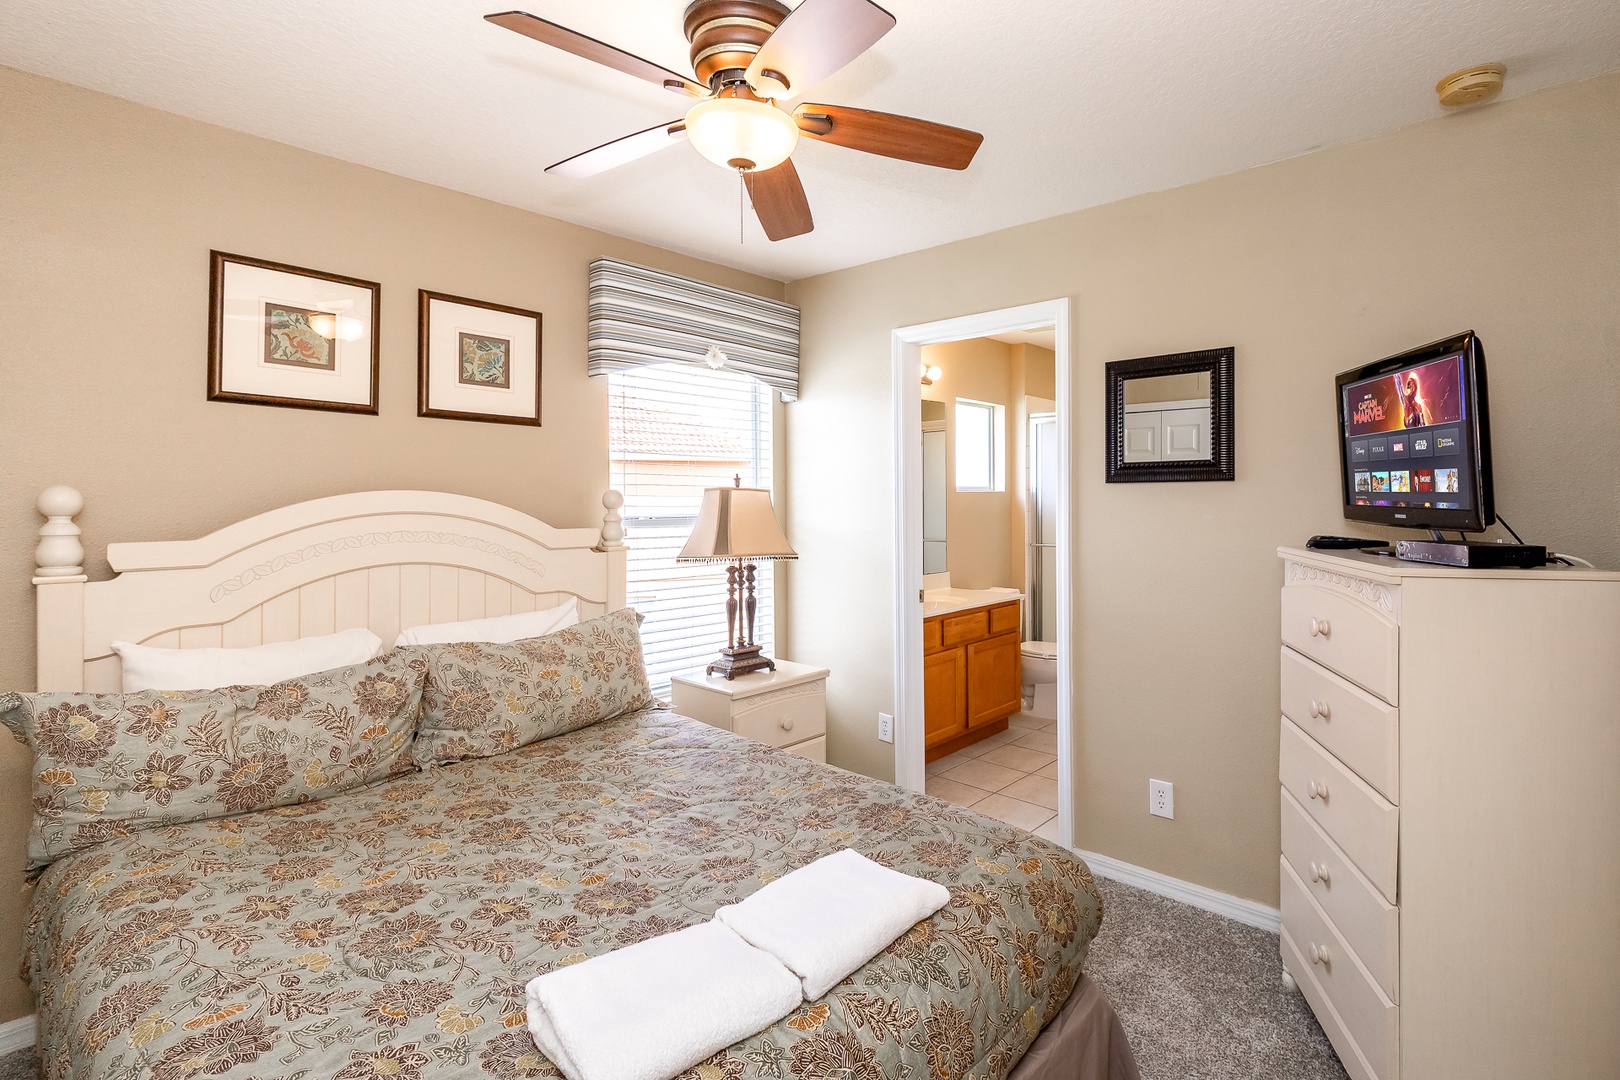 This queen suite offers a private en suite, TV, & ceiling fan